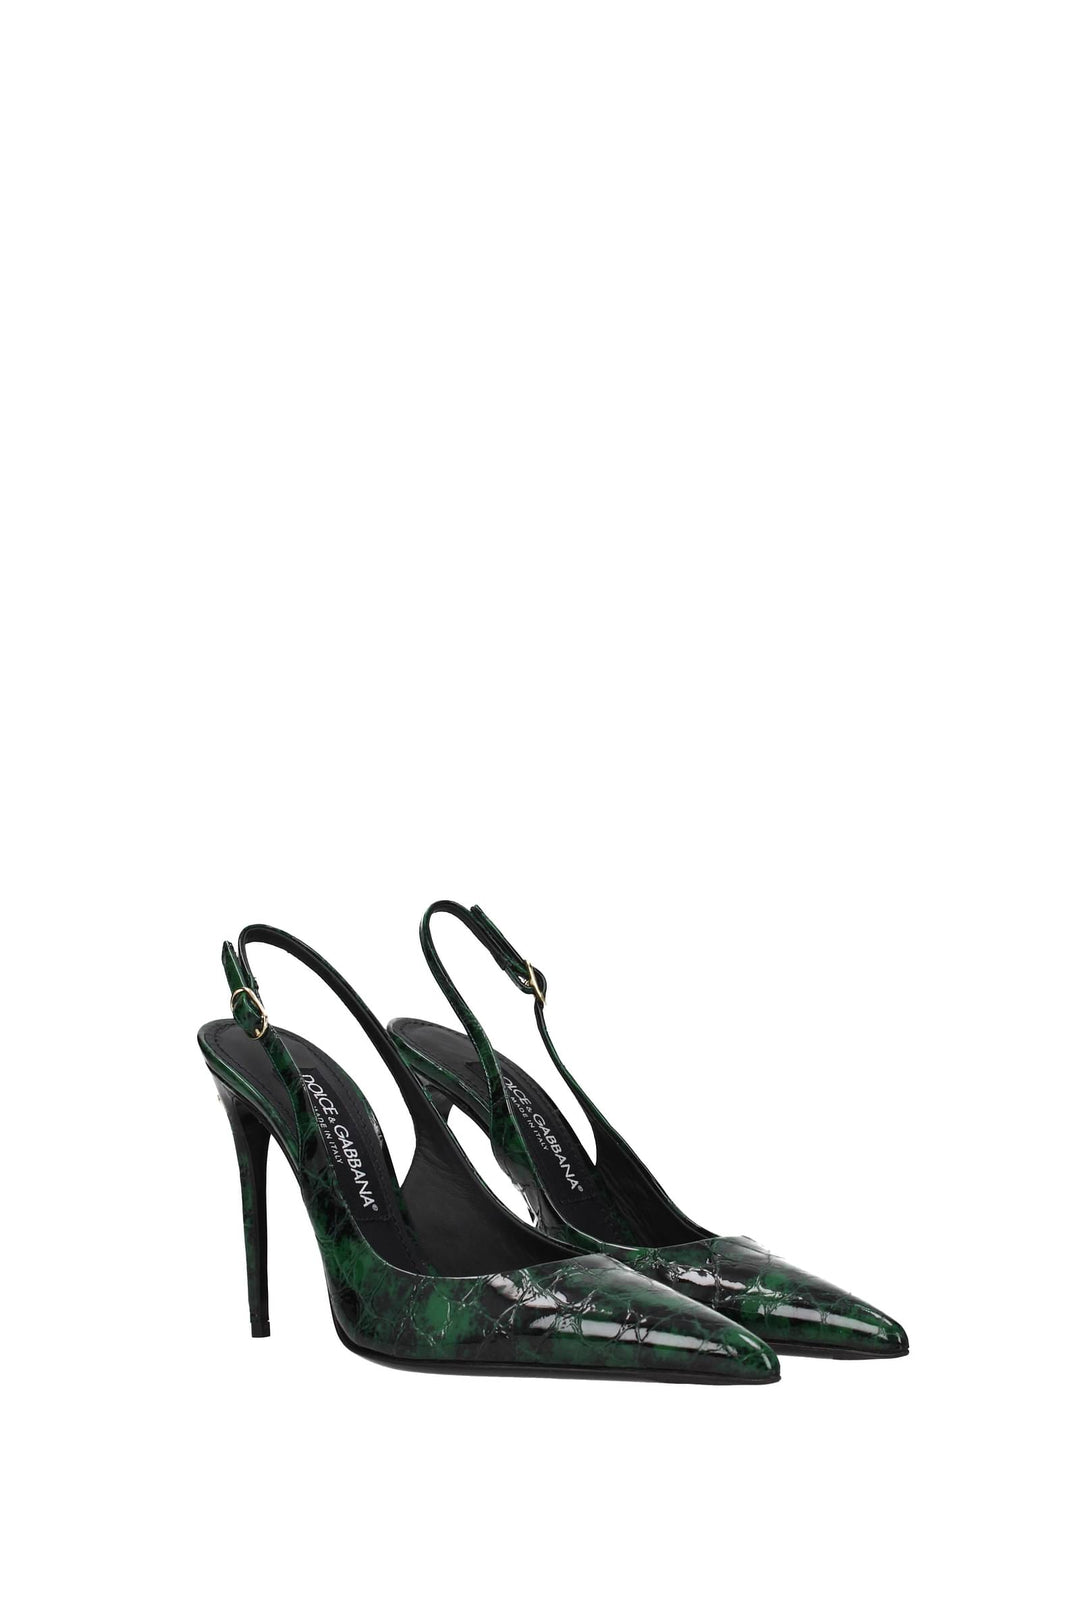 Sandali Vernice Verde Smeraldo - Dolce&Gabbana - Donna